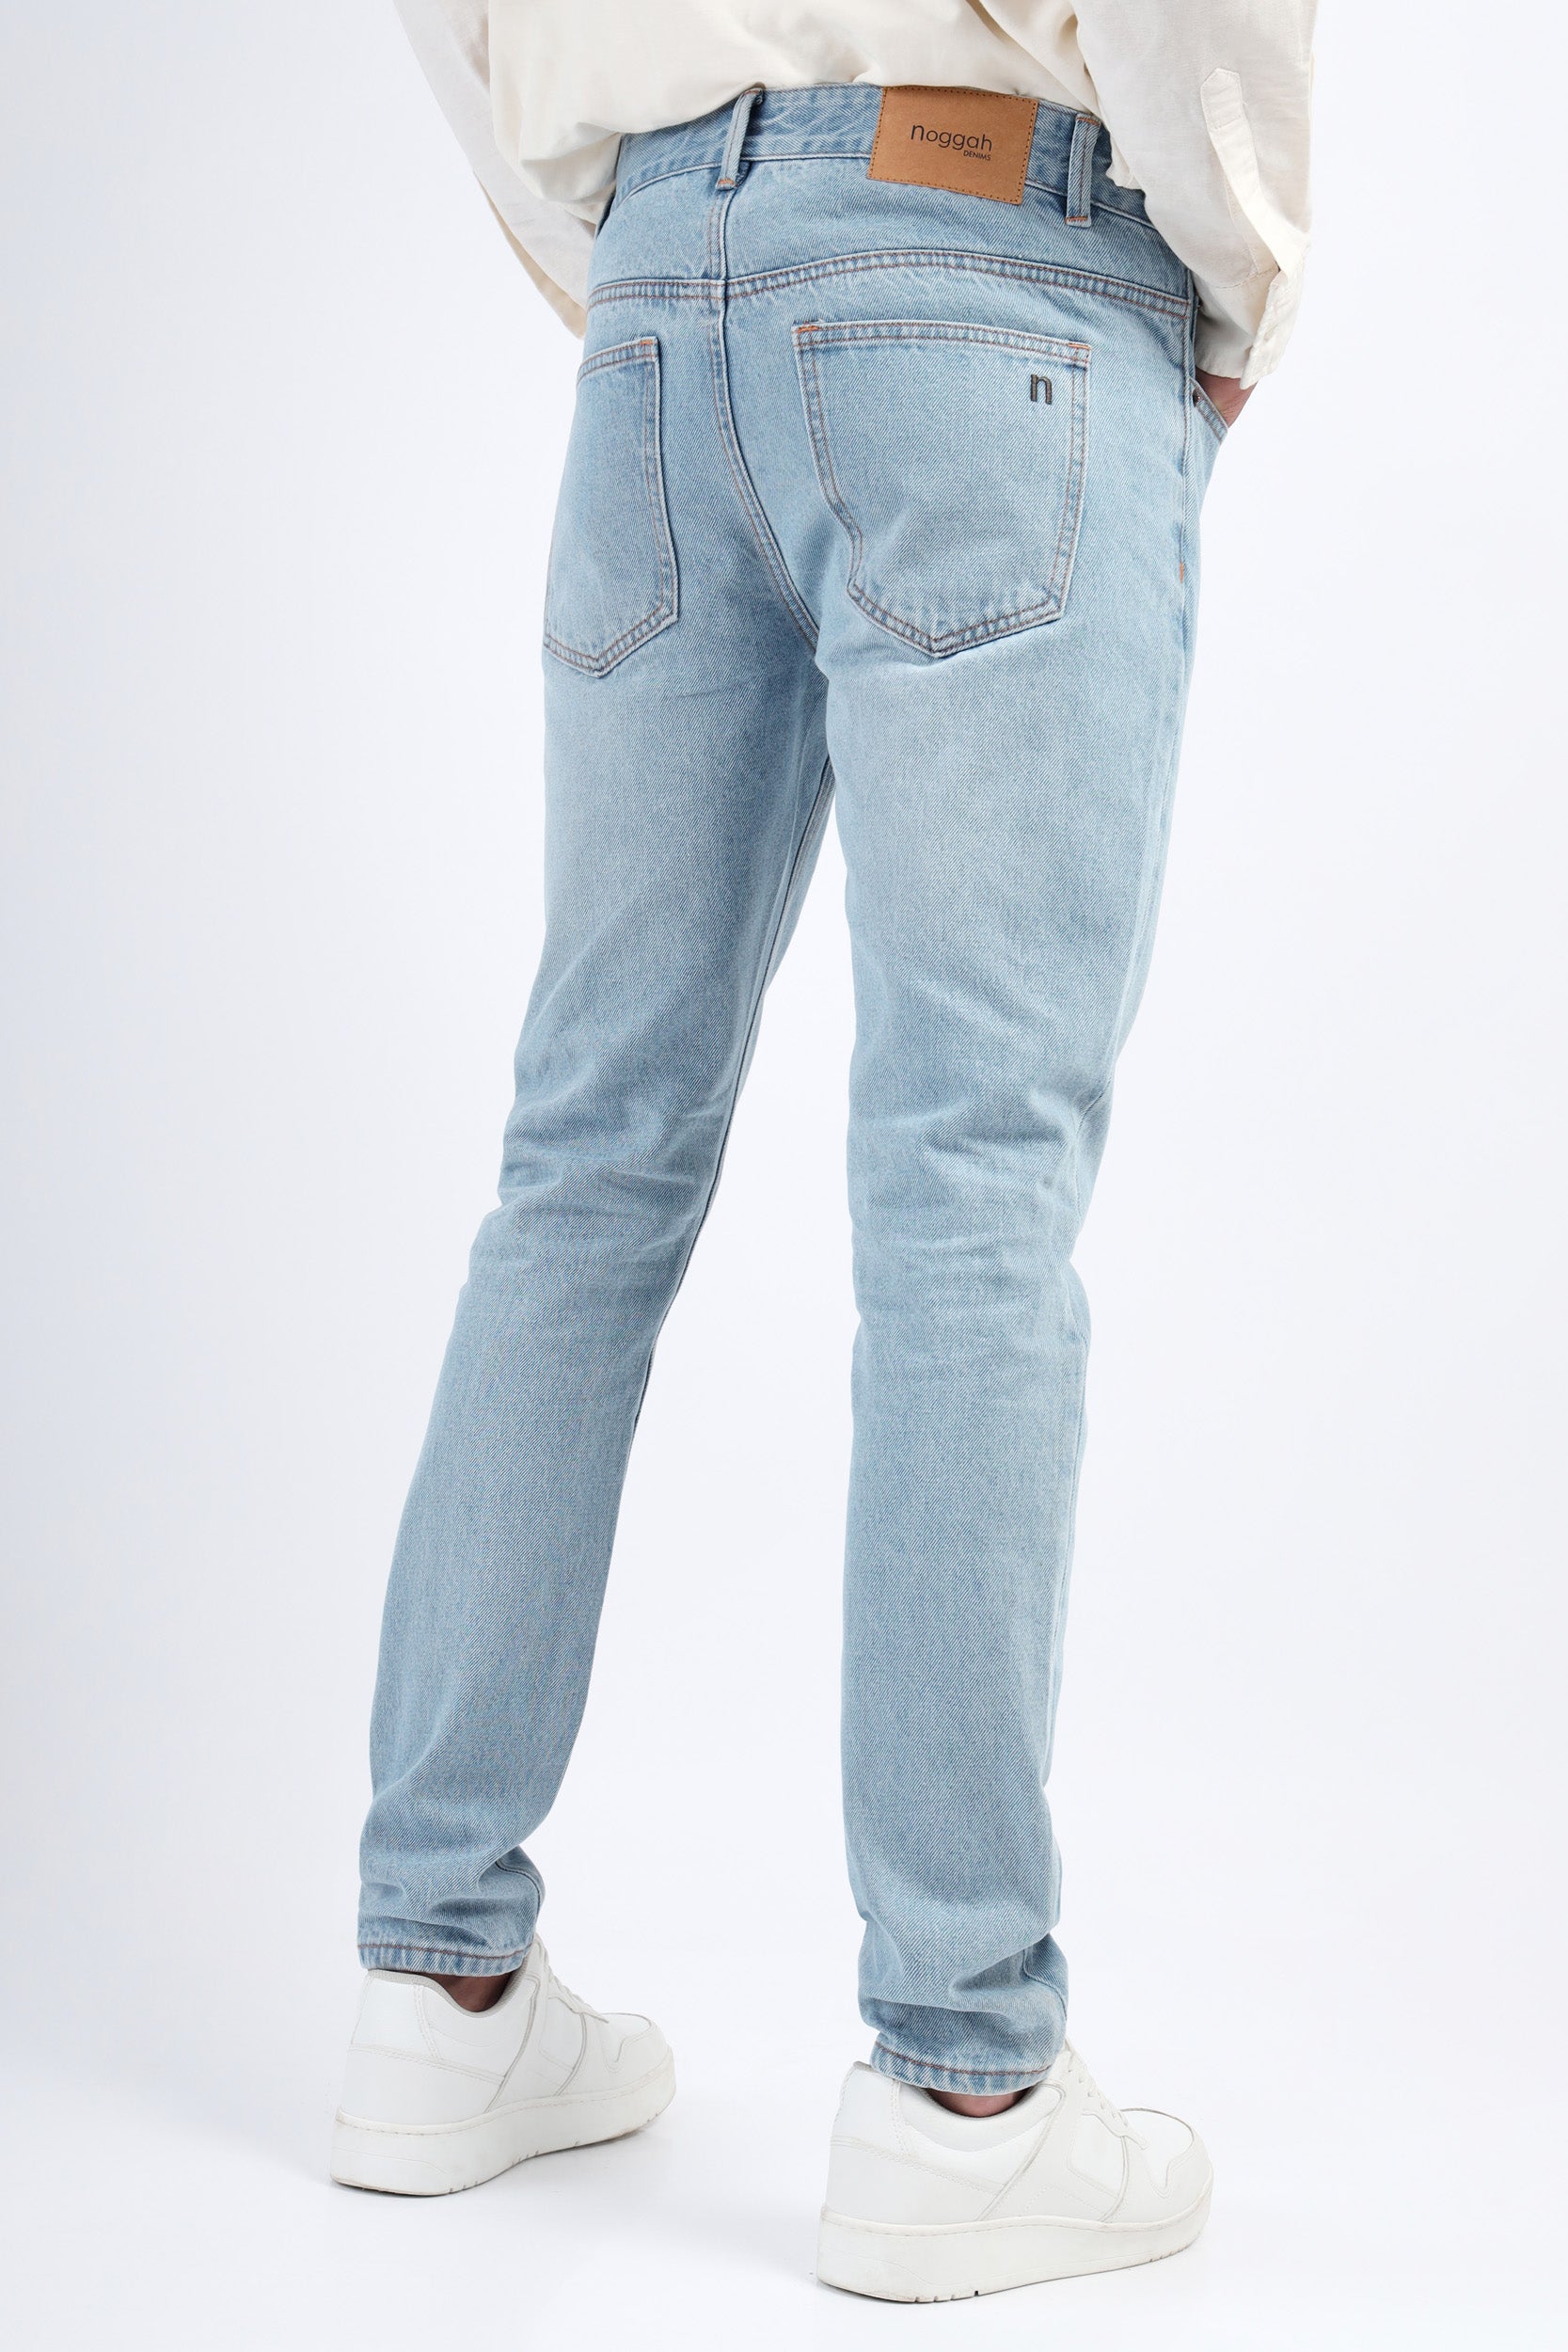 Buy Mens Casual Fit Distressed Denim Jeans Online | Merchant Marine